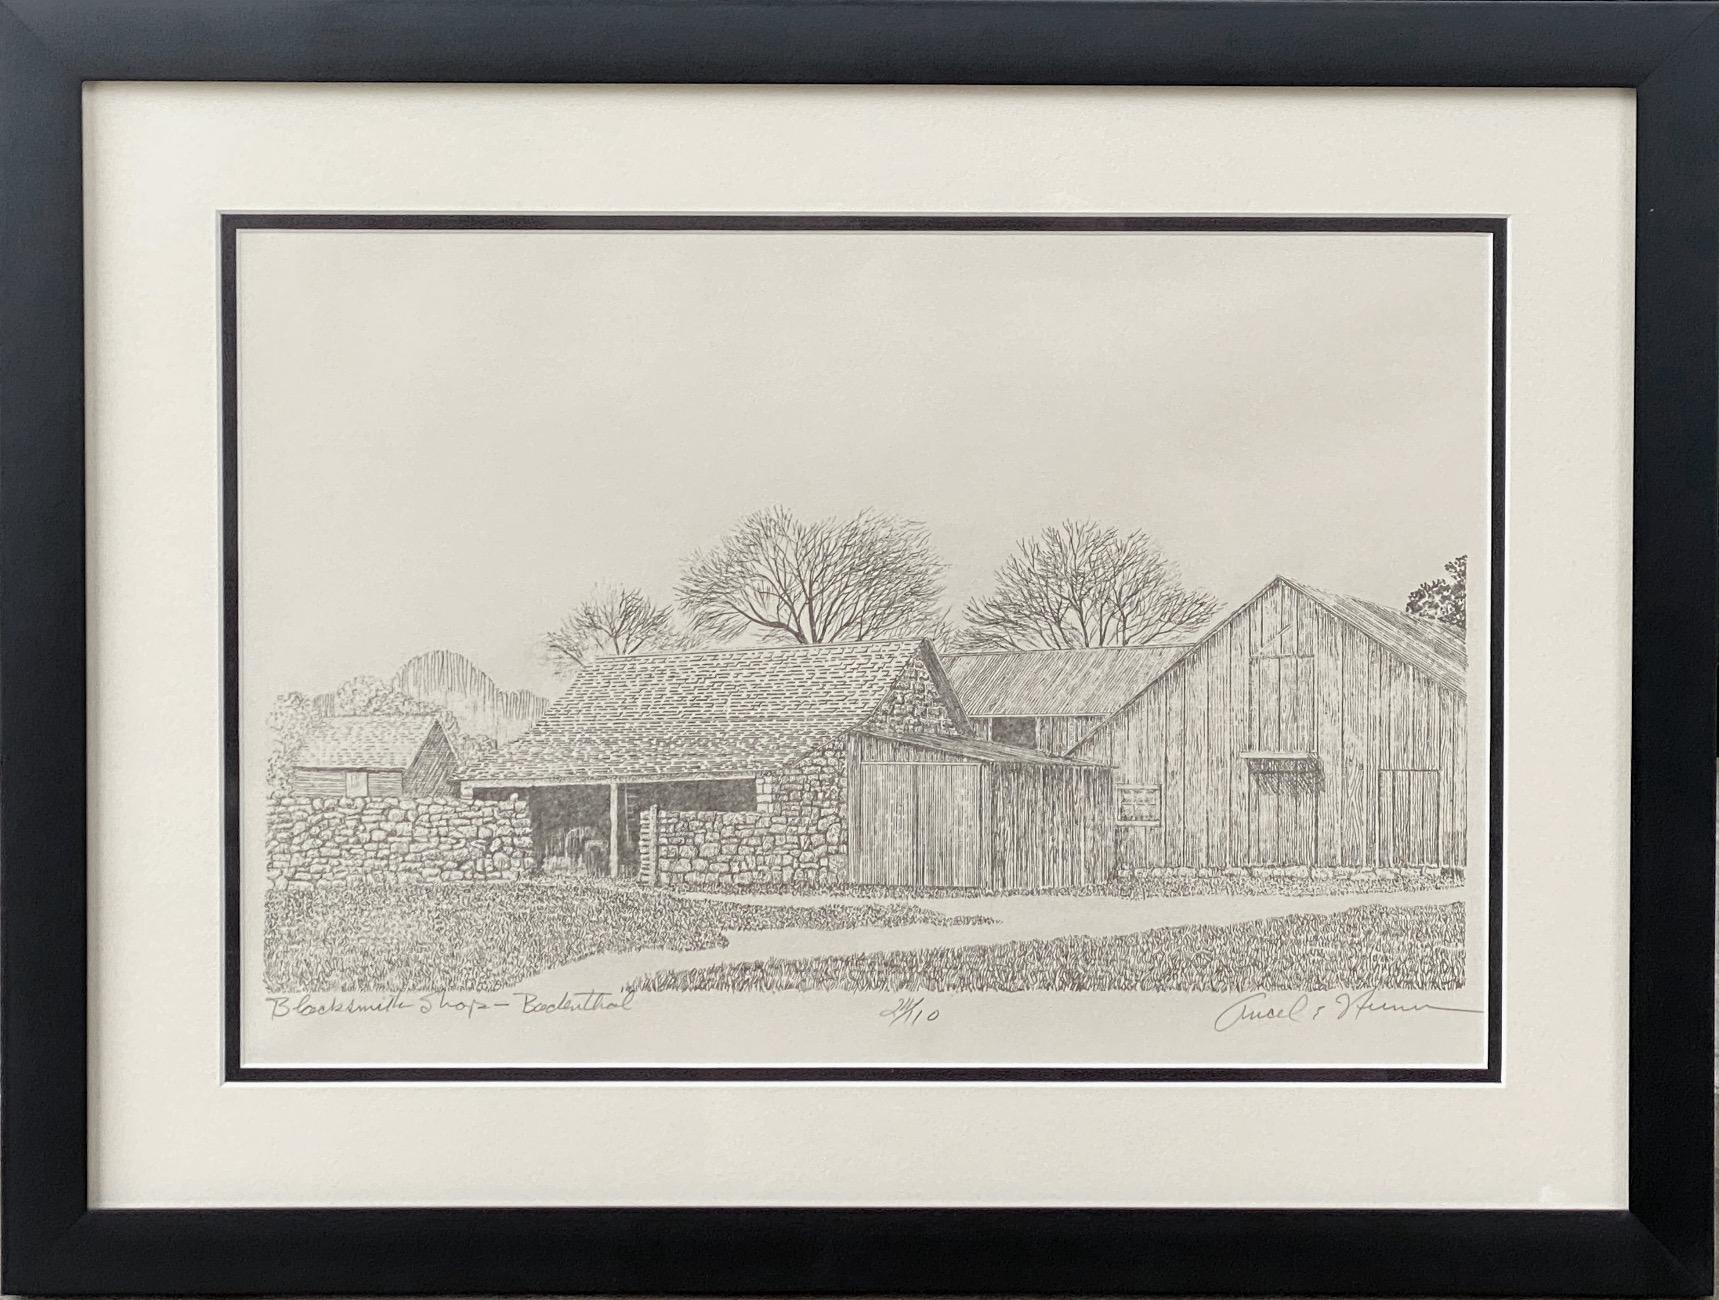 Ancel Nunn Landscape Print - "Blacksmith Shop - Badenthal"  Near Sisterdale Texas